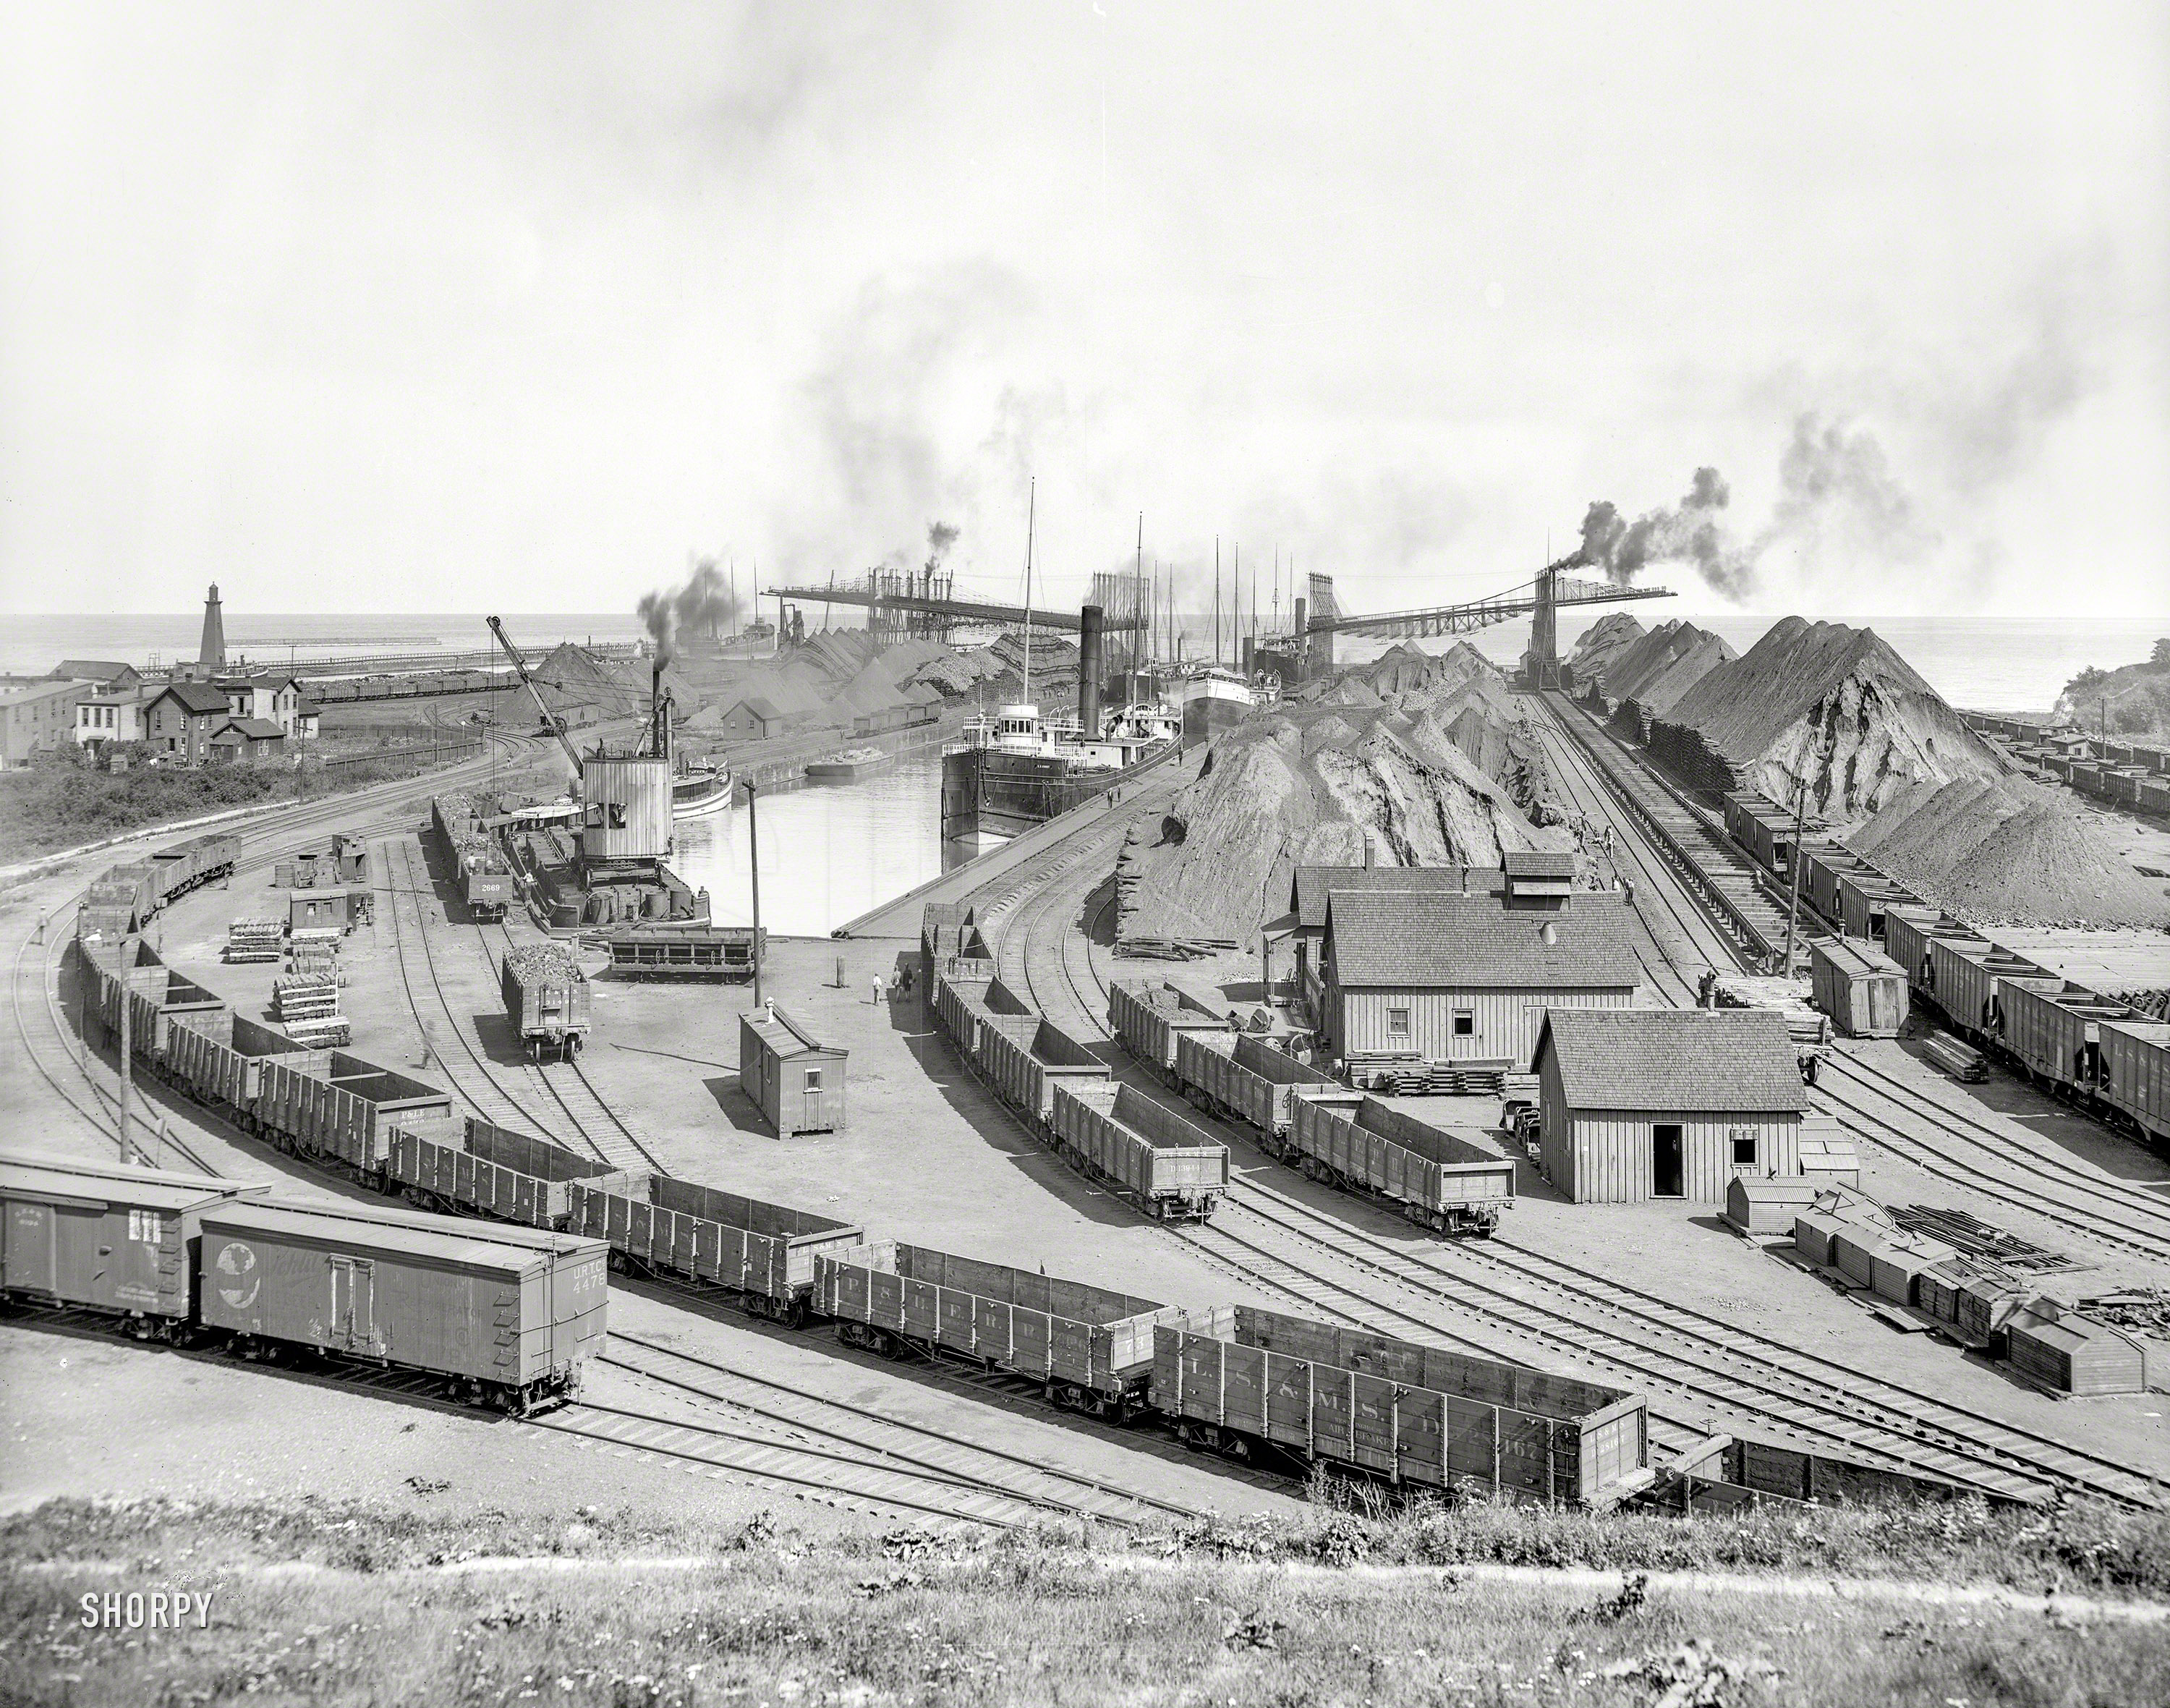 Circa 1900. "Lake Shore & Michigan Southern Railway ore docks, Ashtabula, Ohio." 8x10 inch glass negative, Detroit Publishing Company. View full size.